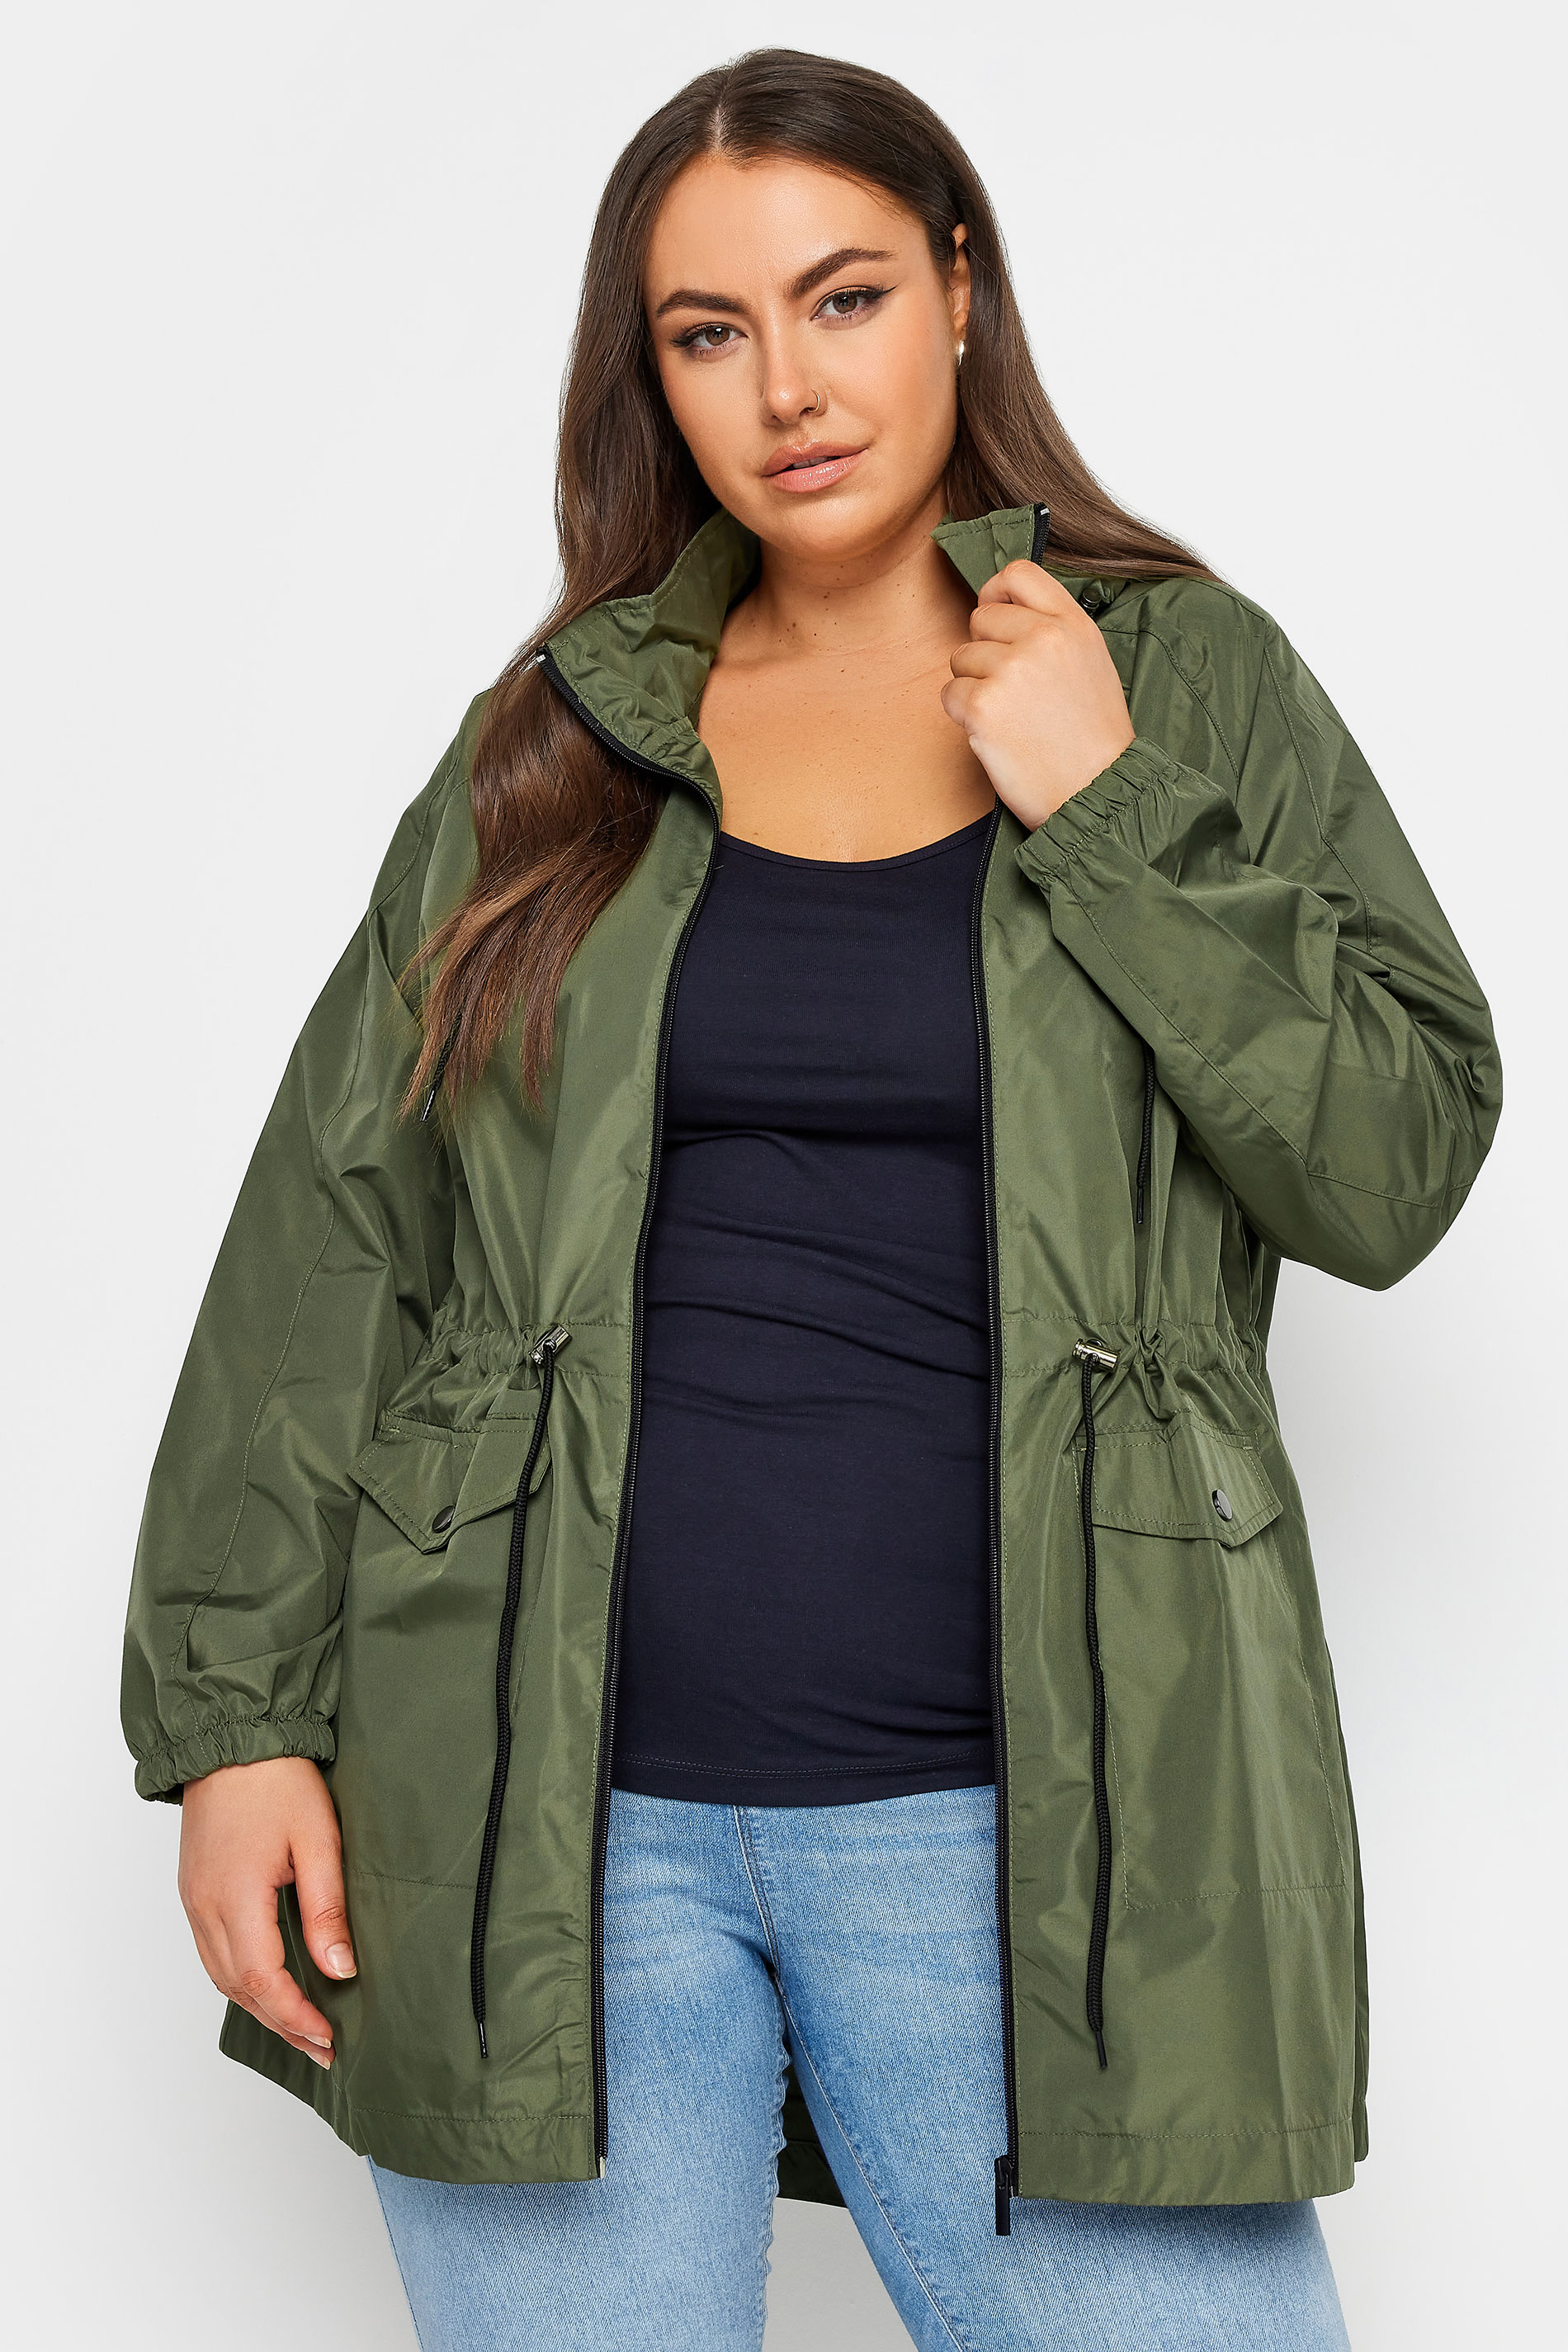 YOURS Plus Size Khaki Green Drawstring Lightweight Parka Jacket | Yours Clothing 1